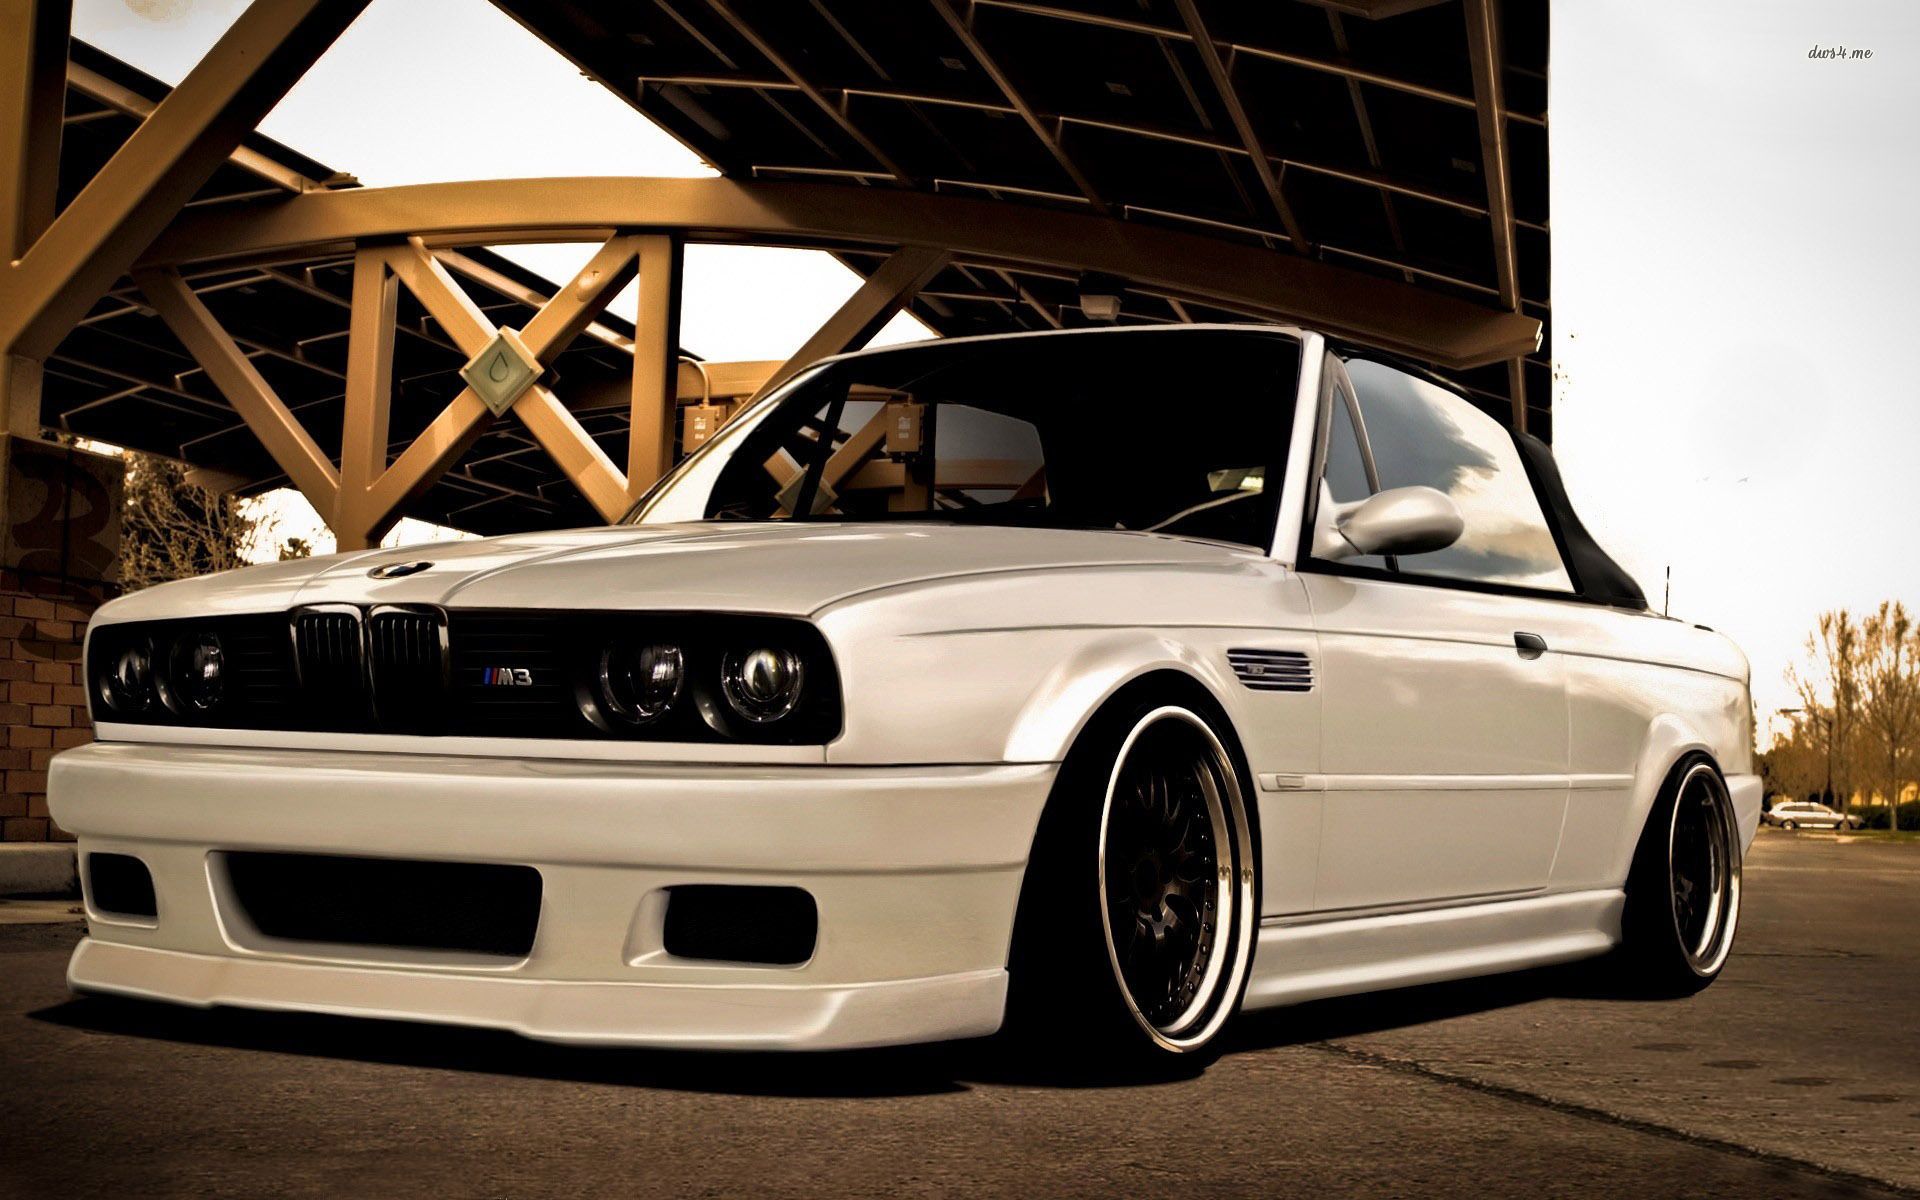 BMW M3 wallpaper - Car wallpapers - #15535